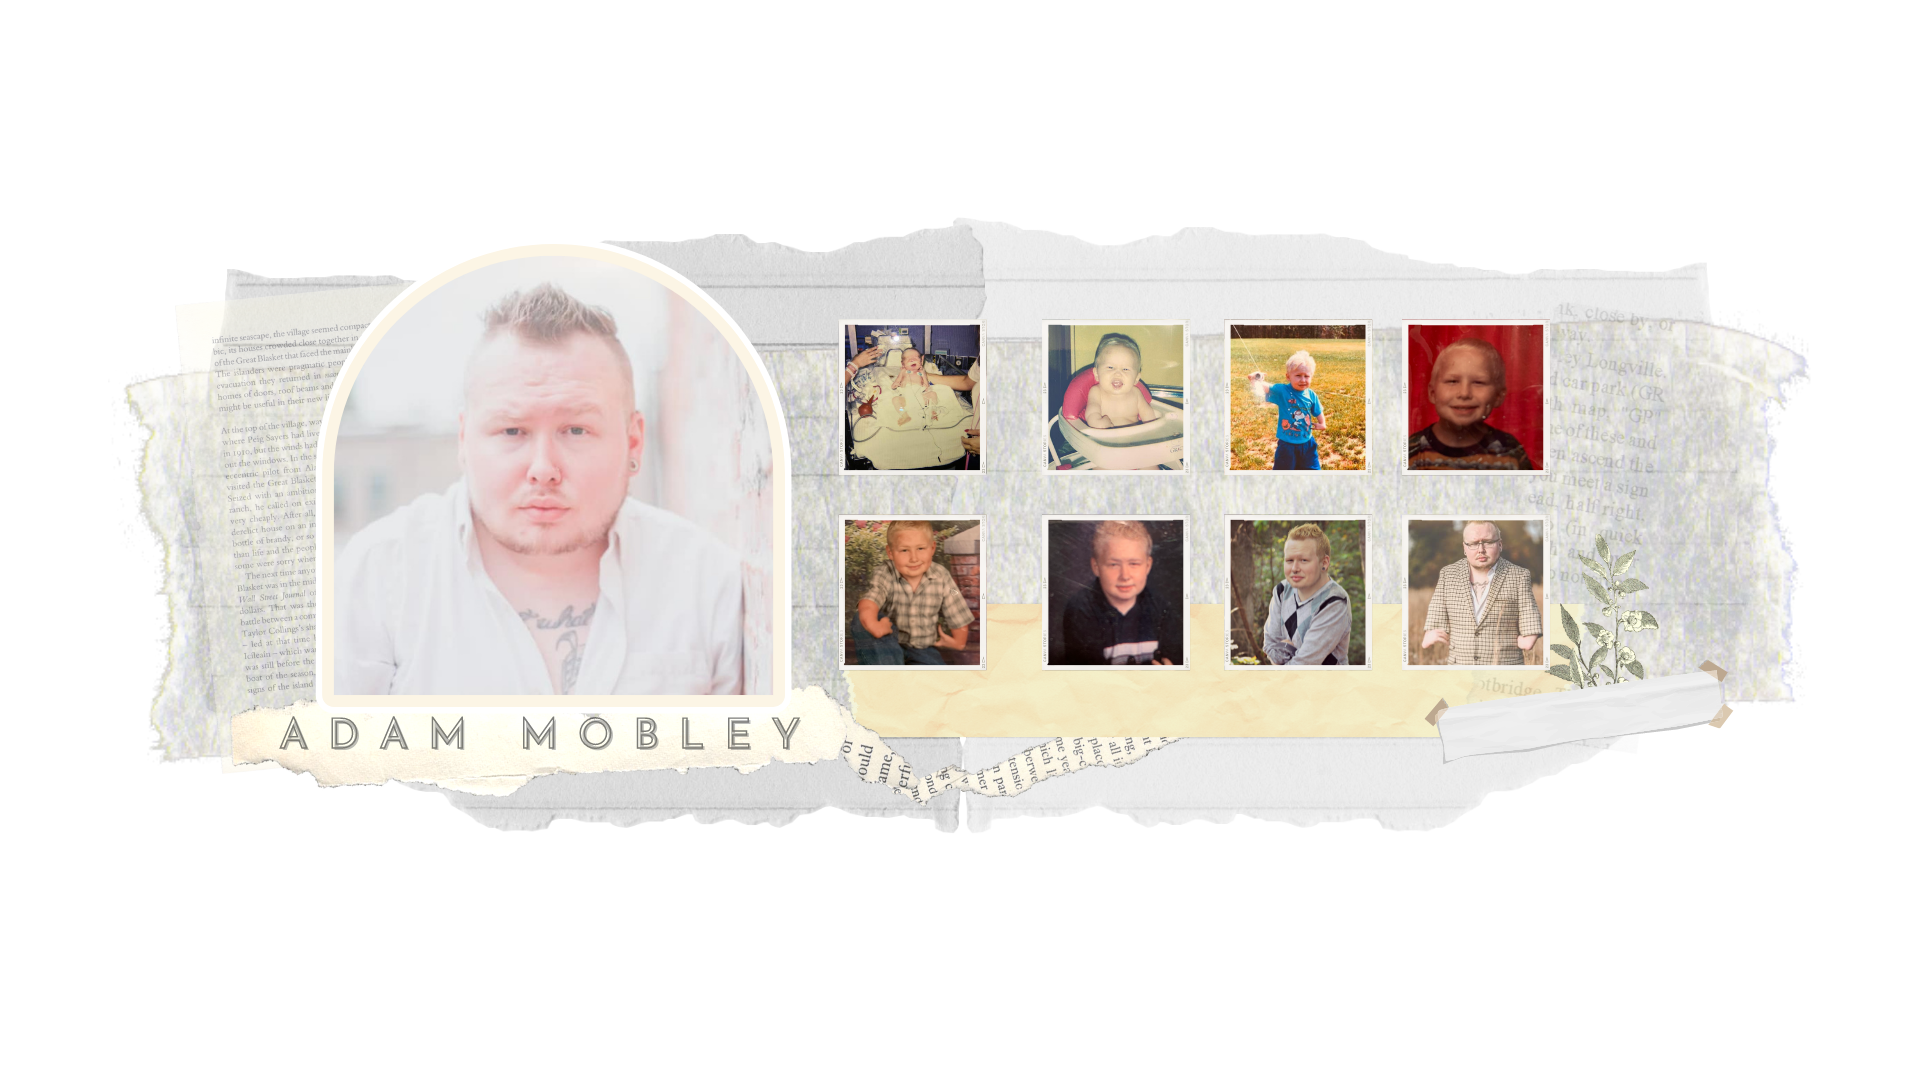 Adam Mobley | Defying all odds